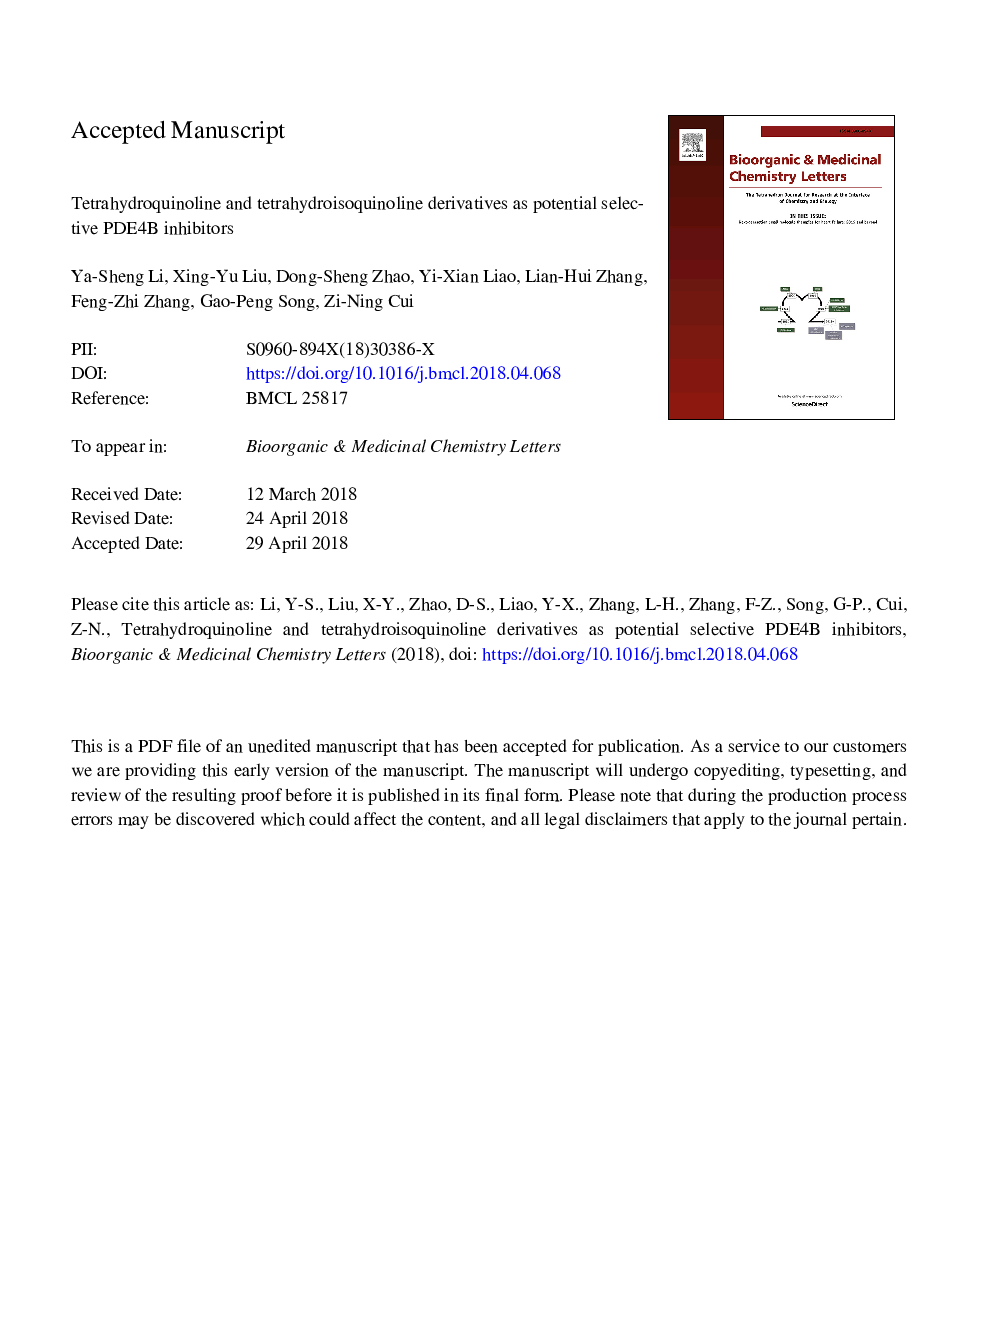 Tetrahydroquinoline and tetrahydroisoquinoline derivatives as potential selective PDE4B inhibitors